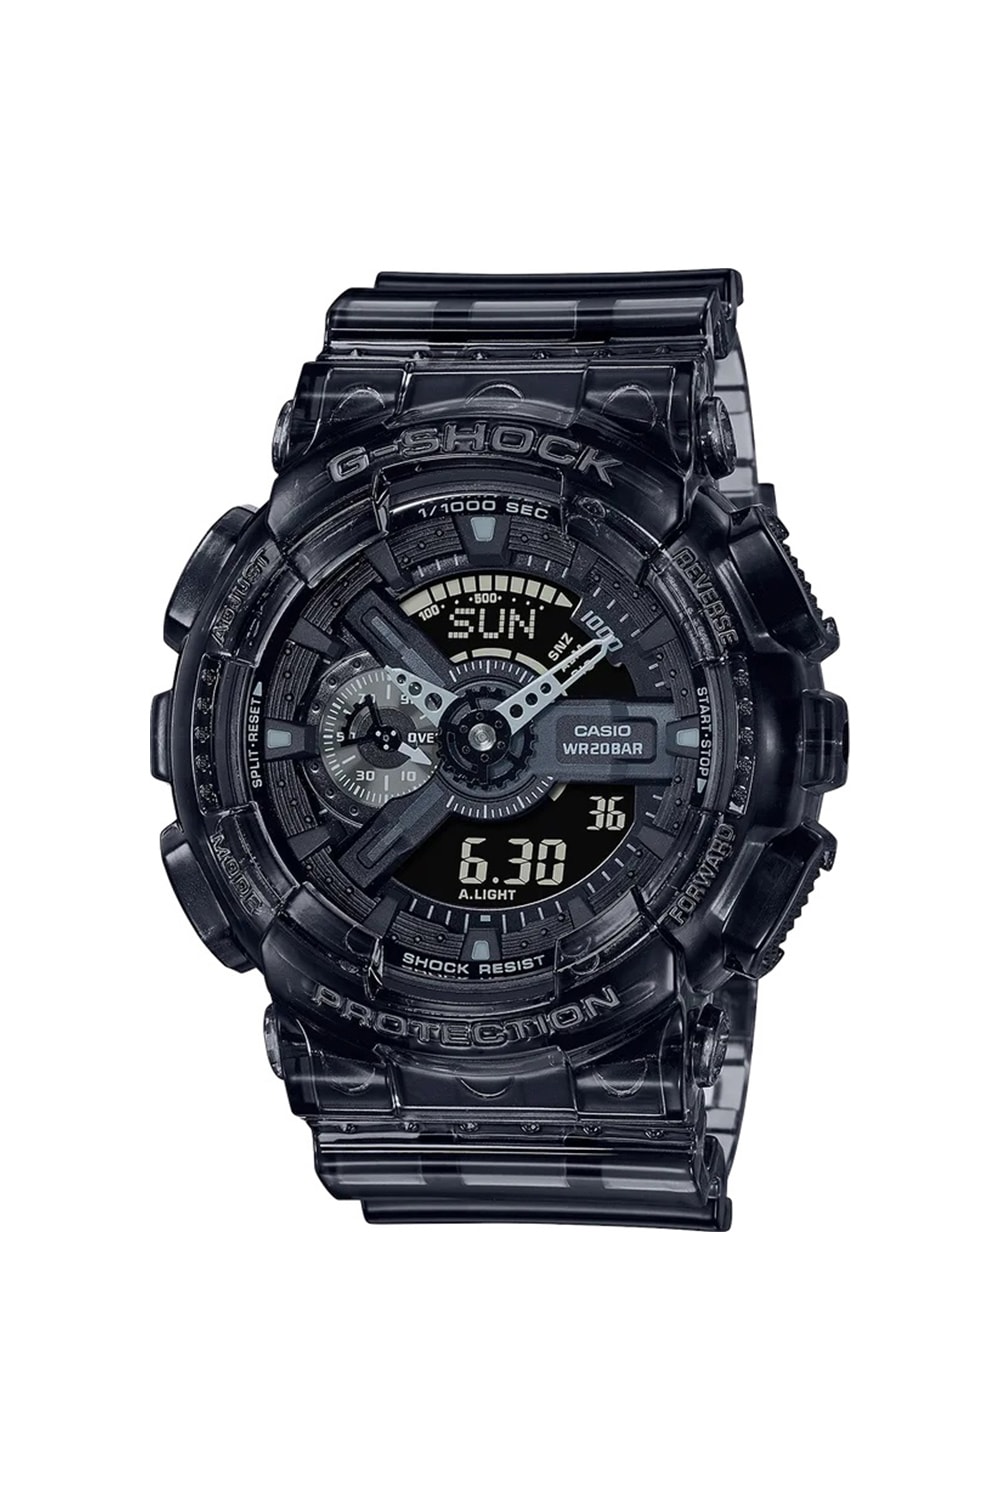 G-Shock 發表全新半透明物料 Transparent Pack 系列腕錶